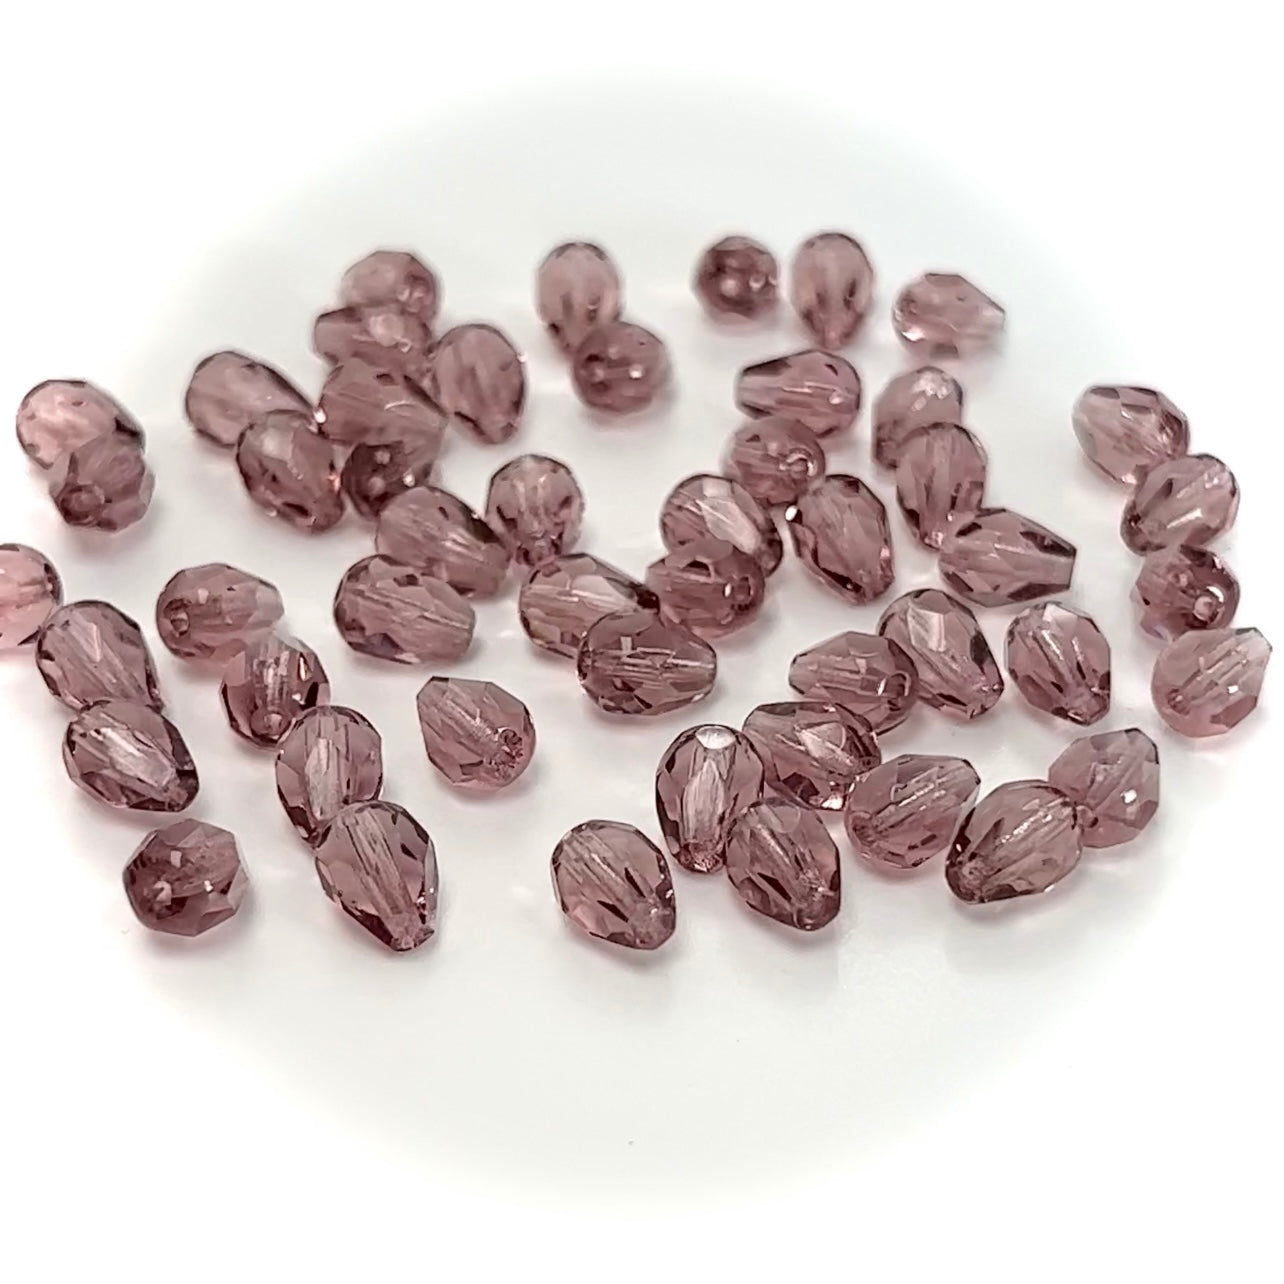 Czech Glass Pear Shaped Fire Polished Beads 8x6mm Light Amethyst purple Tear Drops, 50 pieces, J027